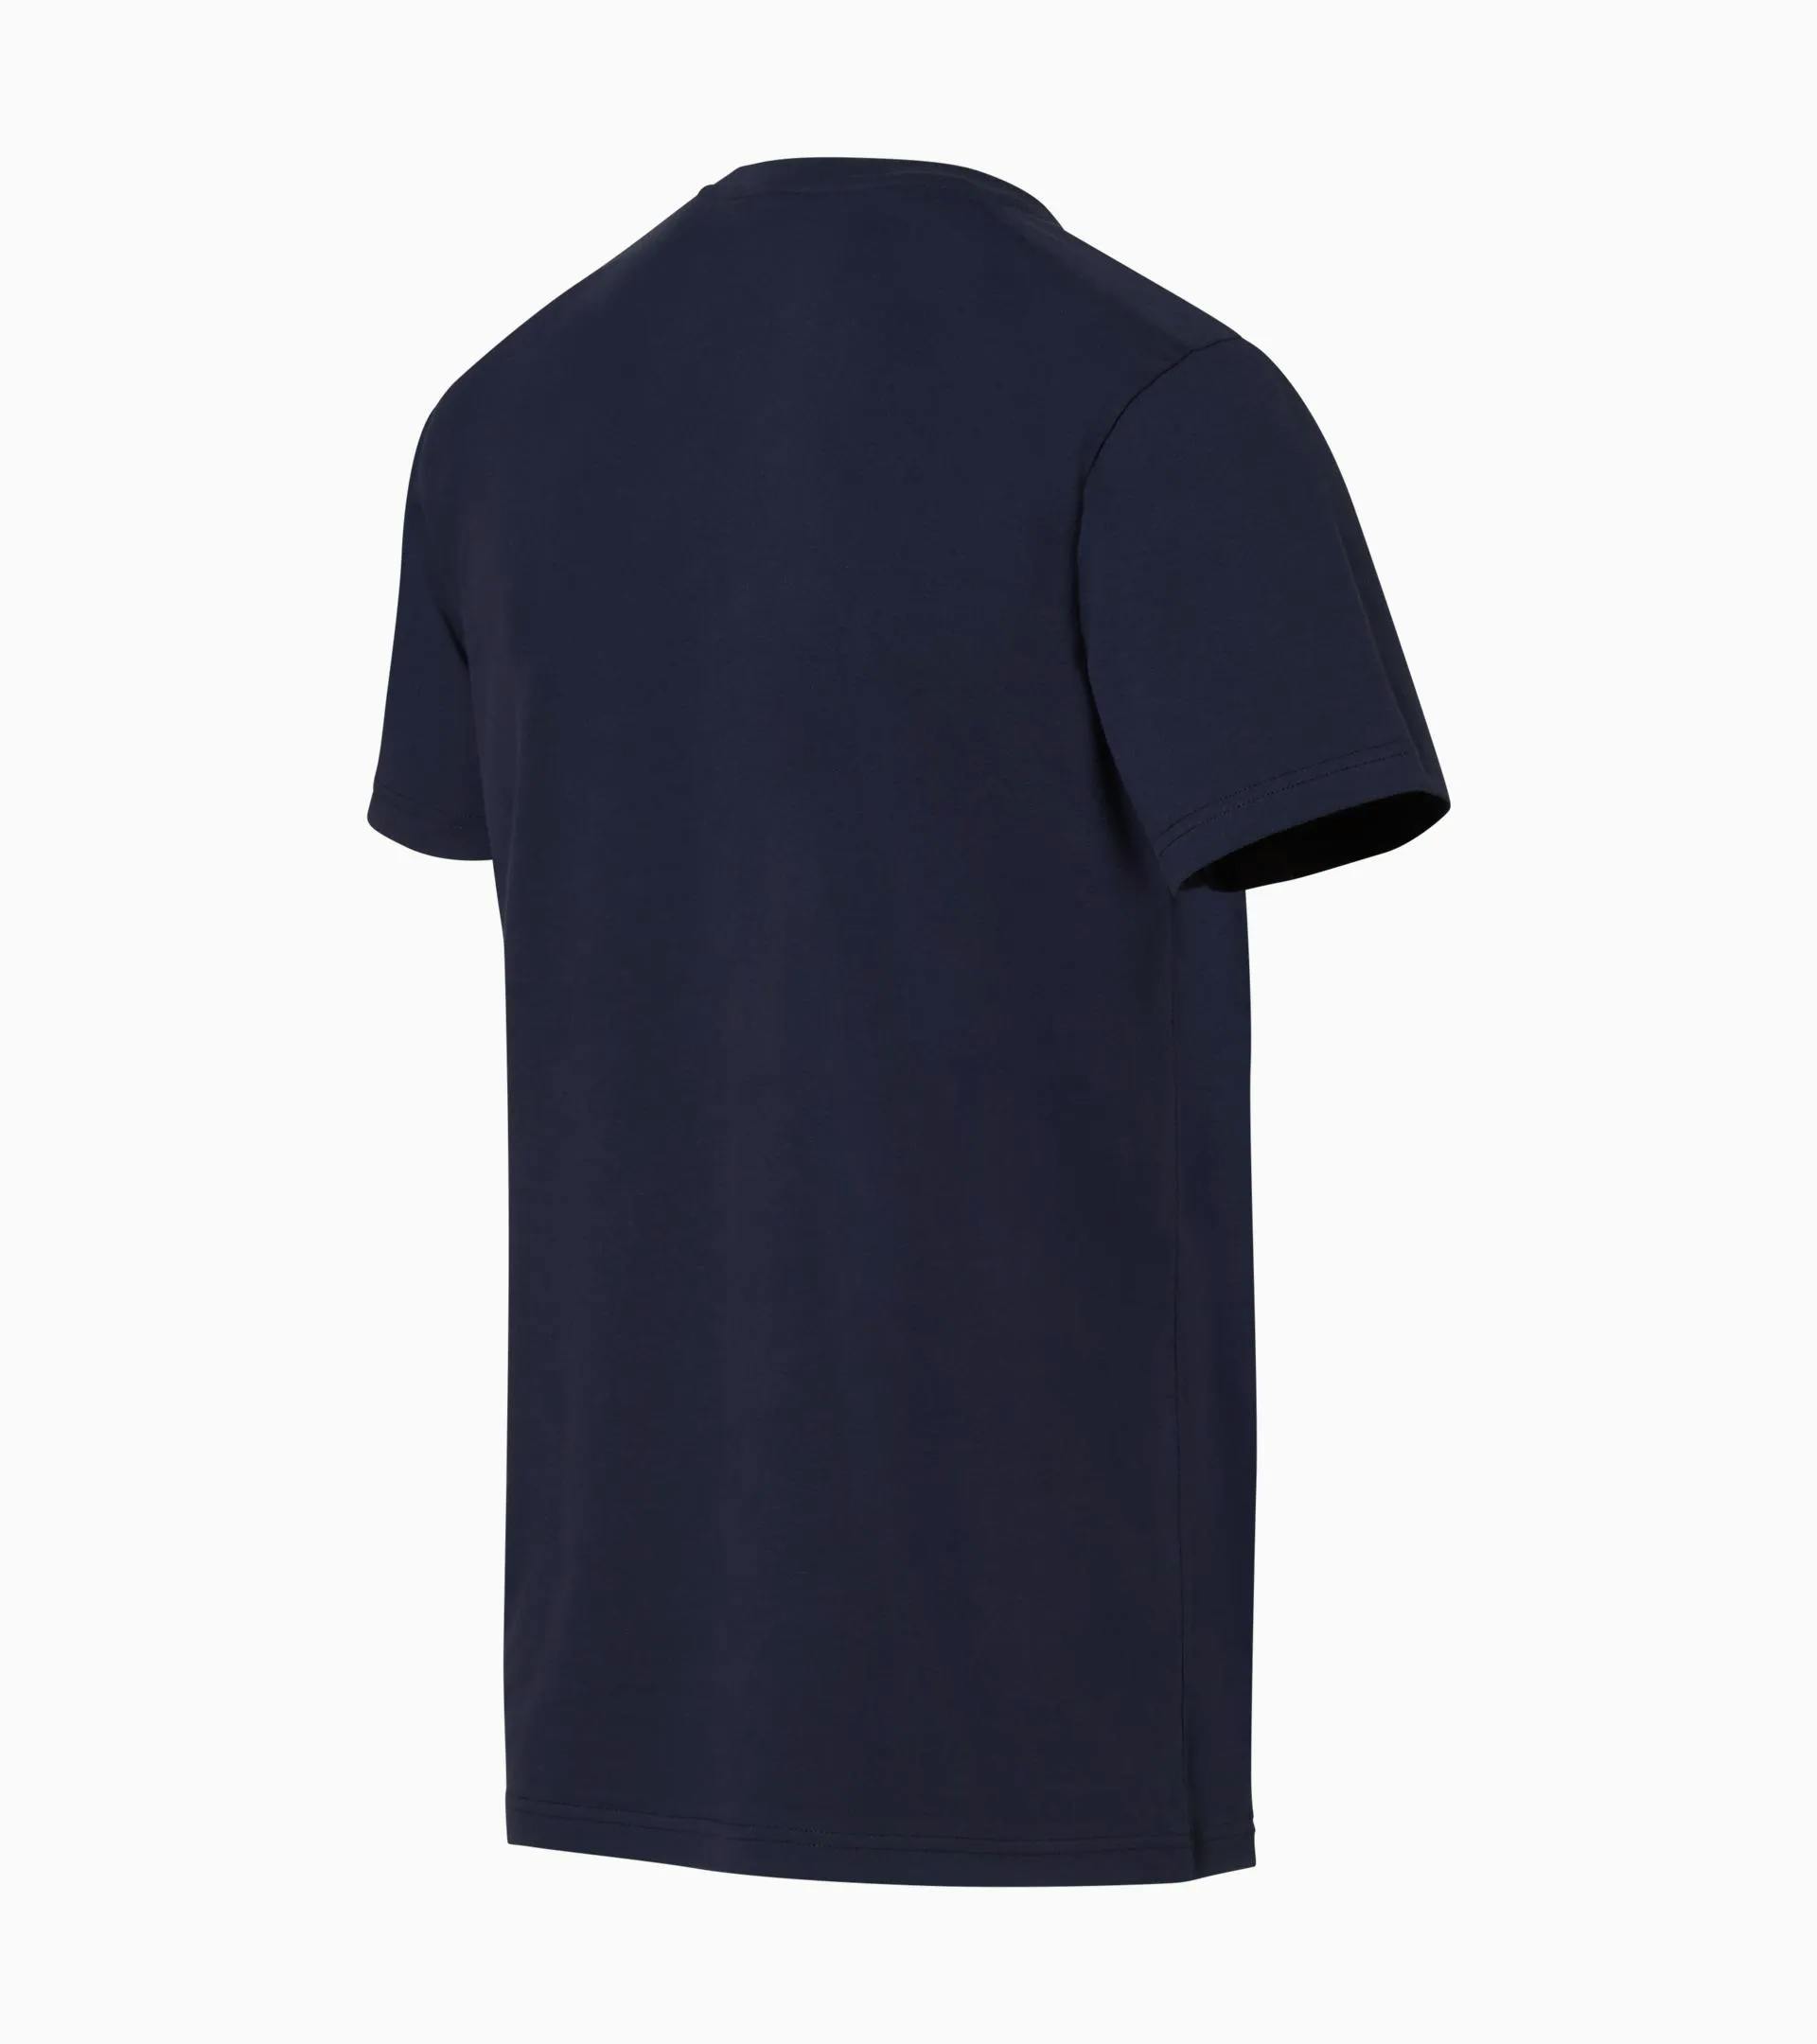 Collector’s T-shirt edition No. 18 unisex – MARTINI RACING® – Ltd. 2